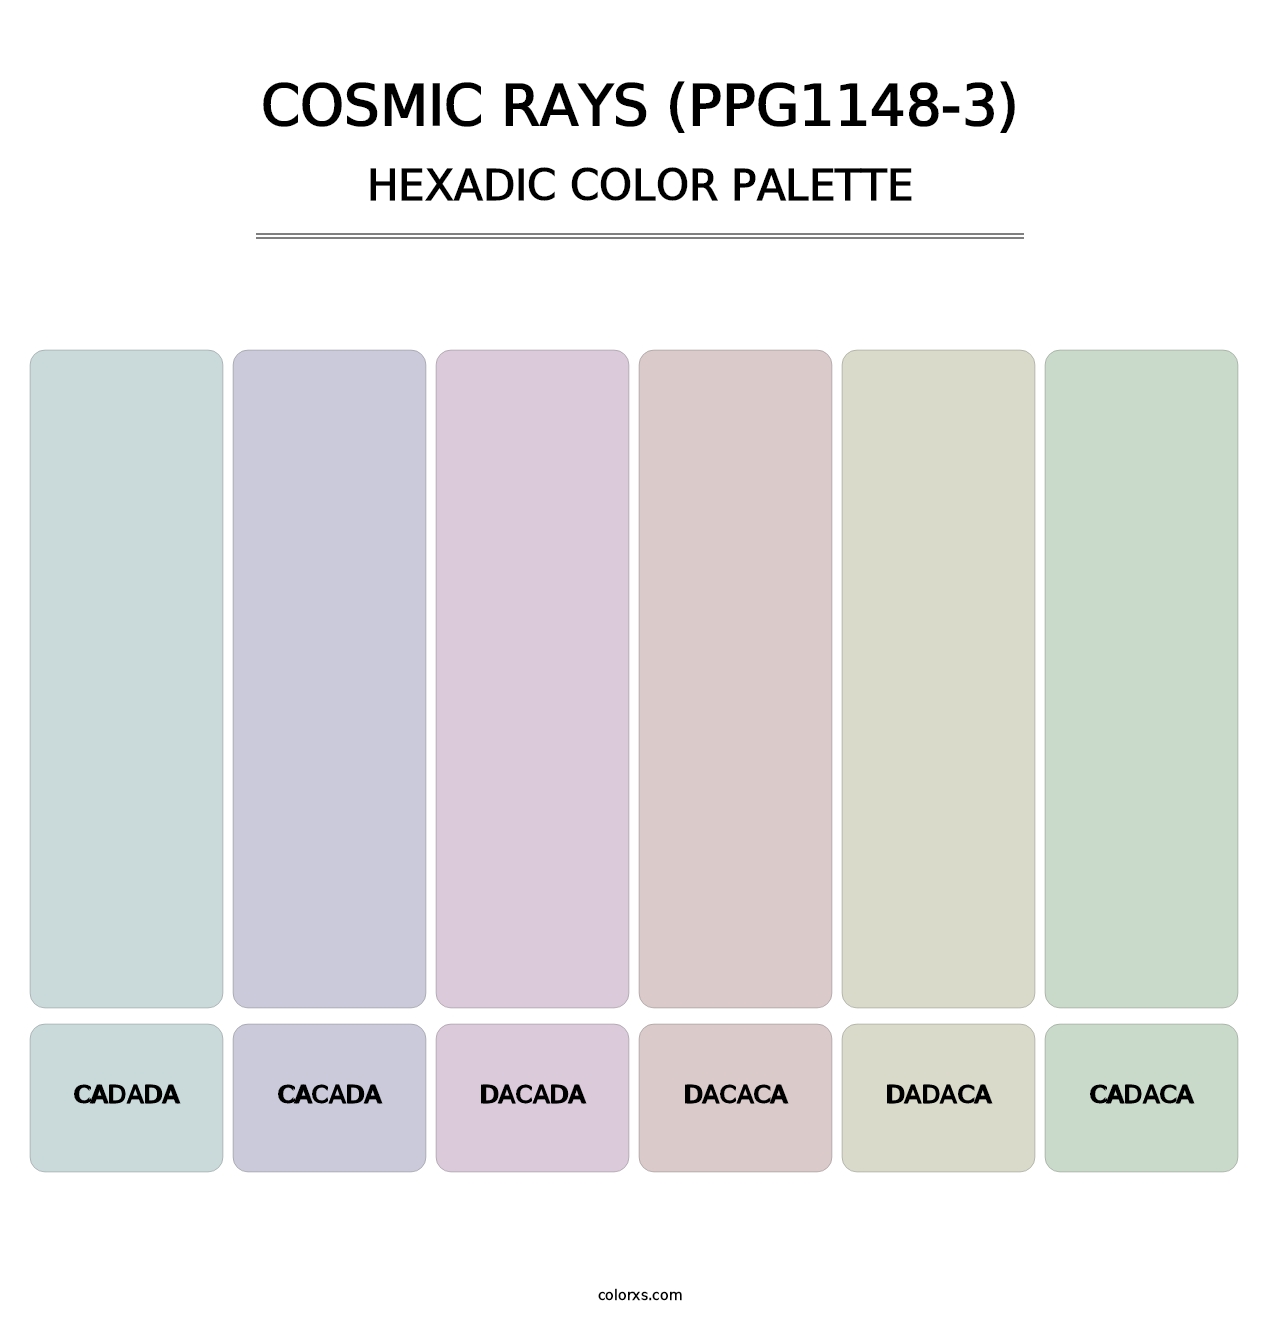 Cosmic Rays (PPG1148-3) - Hexadic Color Palette